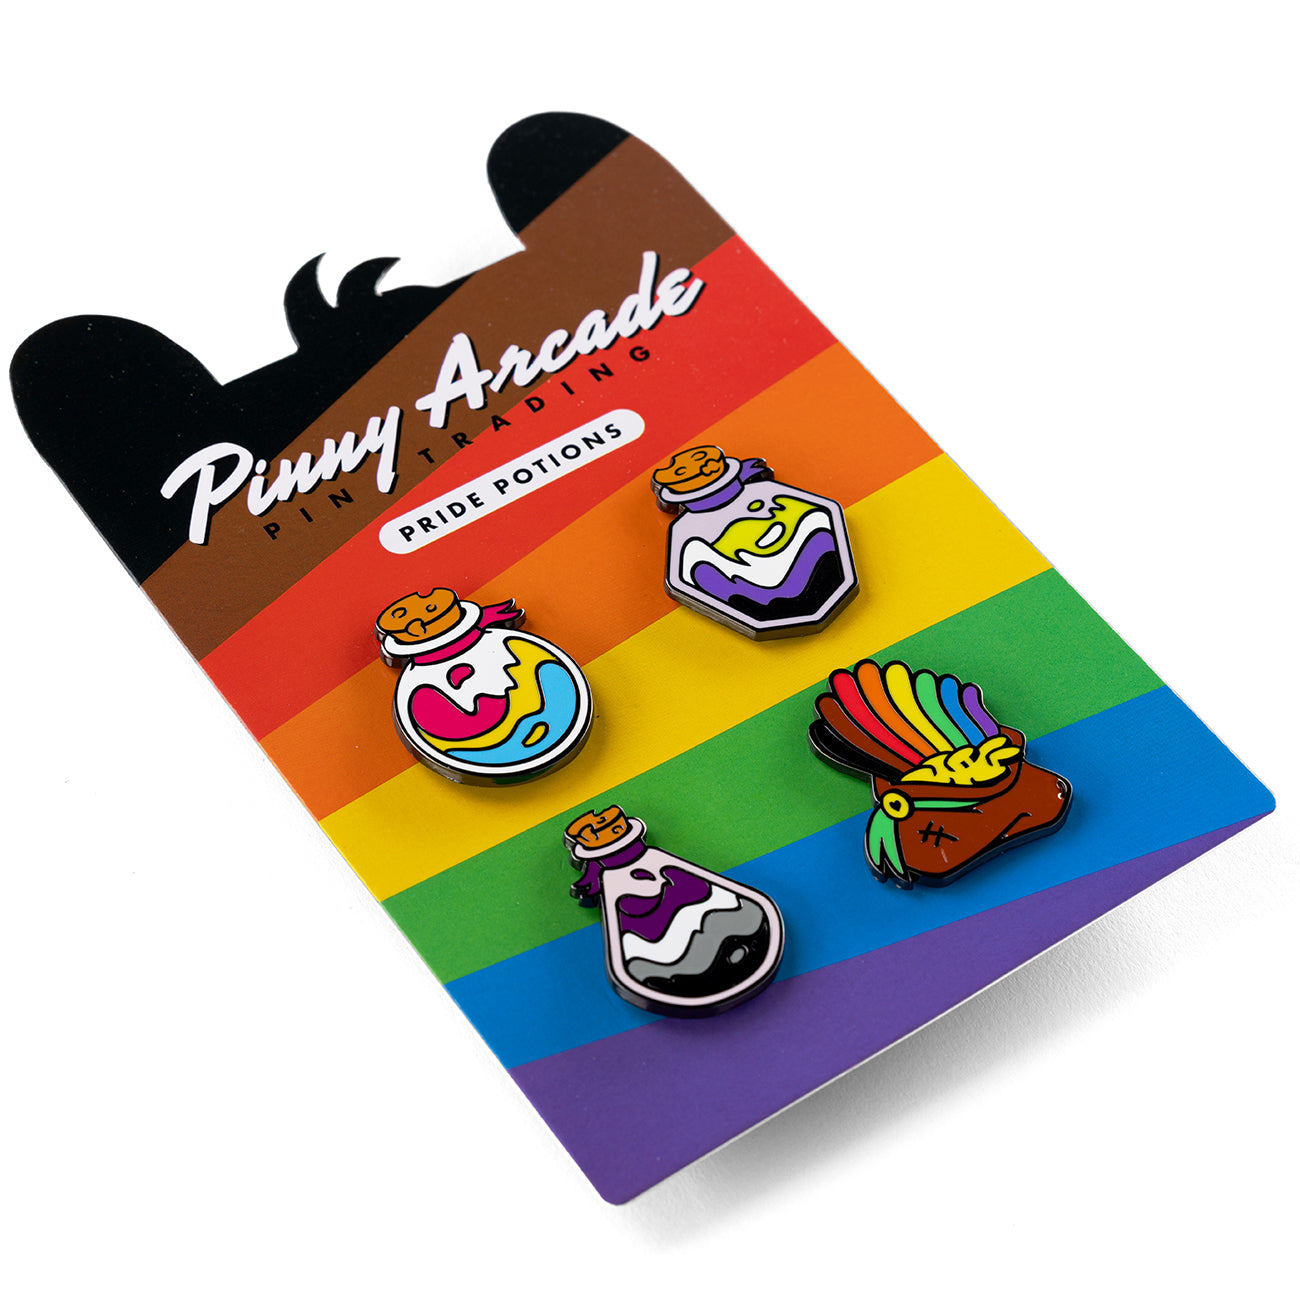 Animal Crossing™: New Horizons Pin Set – Penny Arcade Store